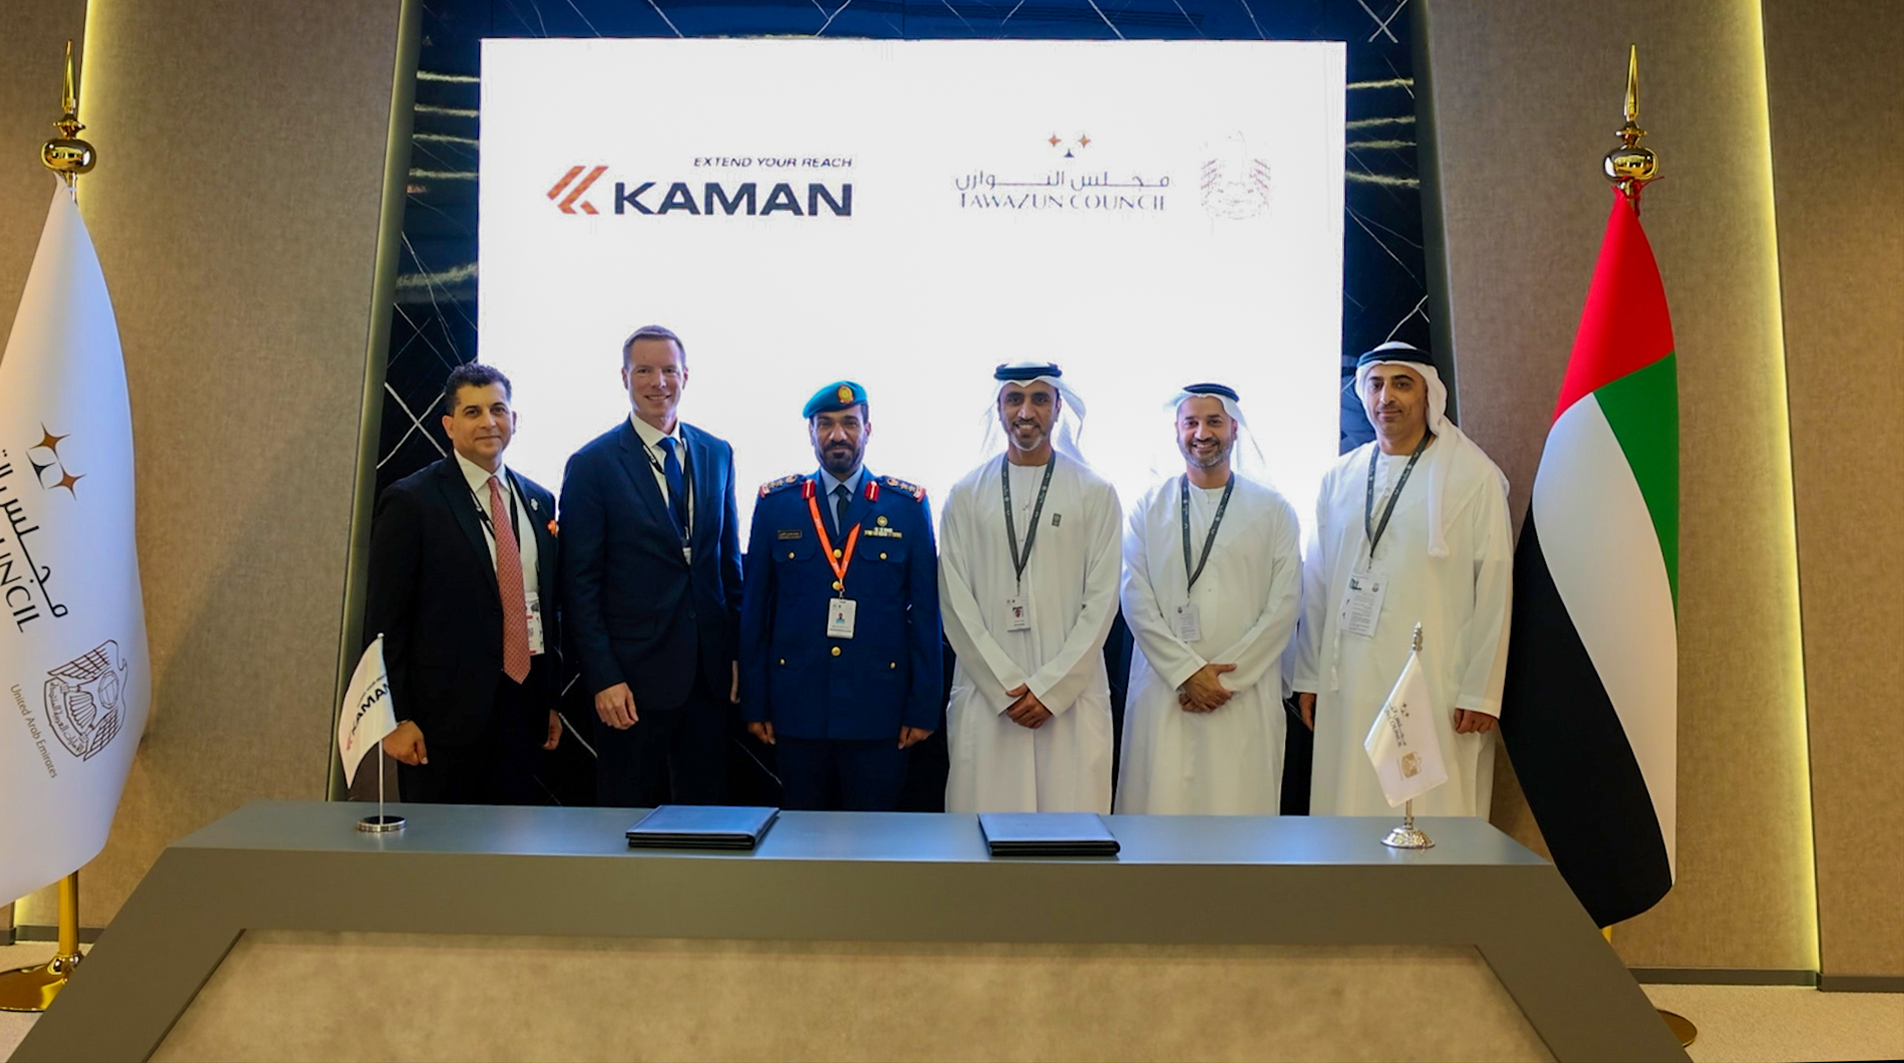 Tawazun Council, Kaman sign to setup height of burst manufacturing facility in UAE